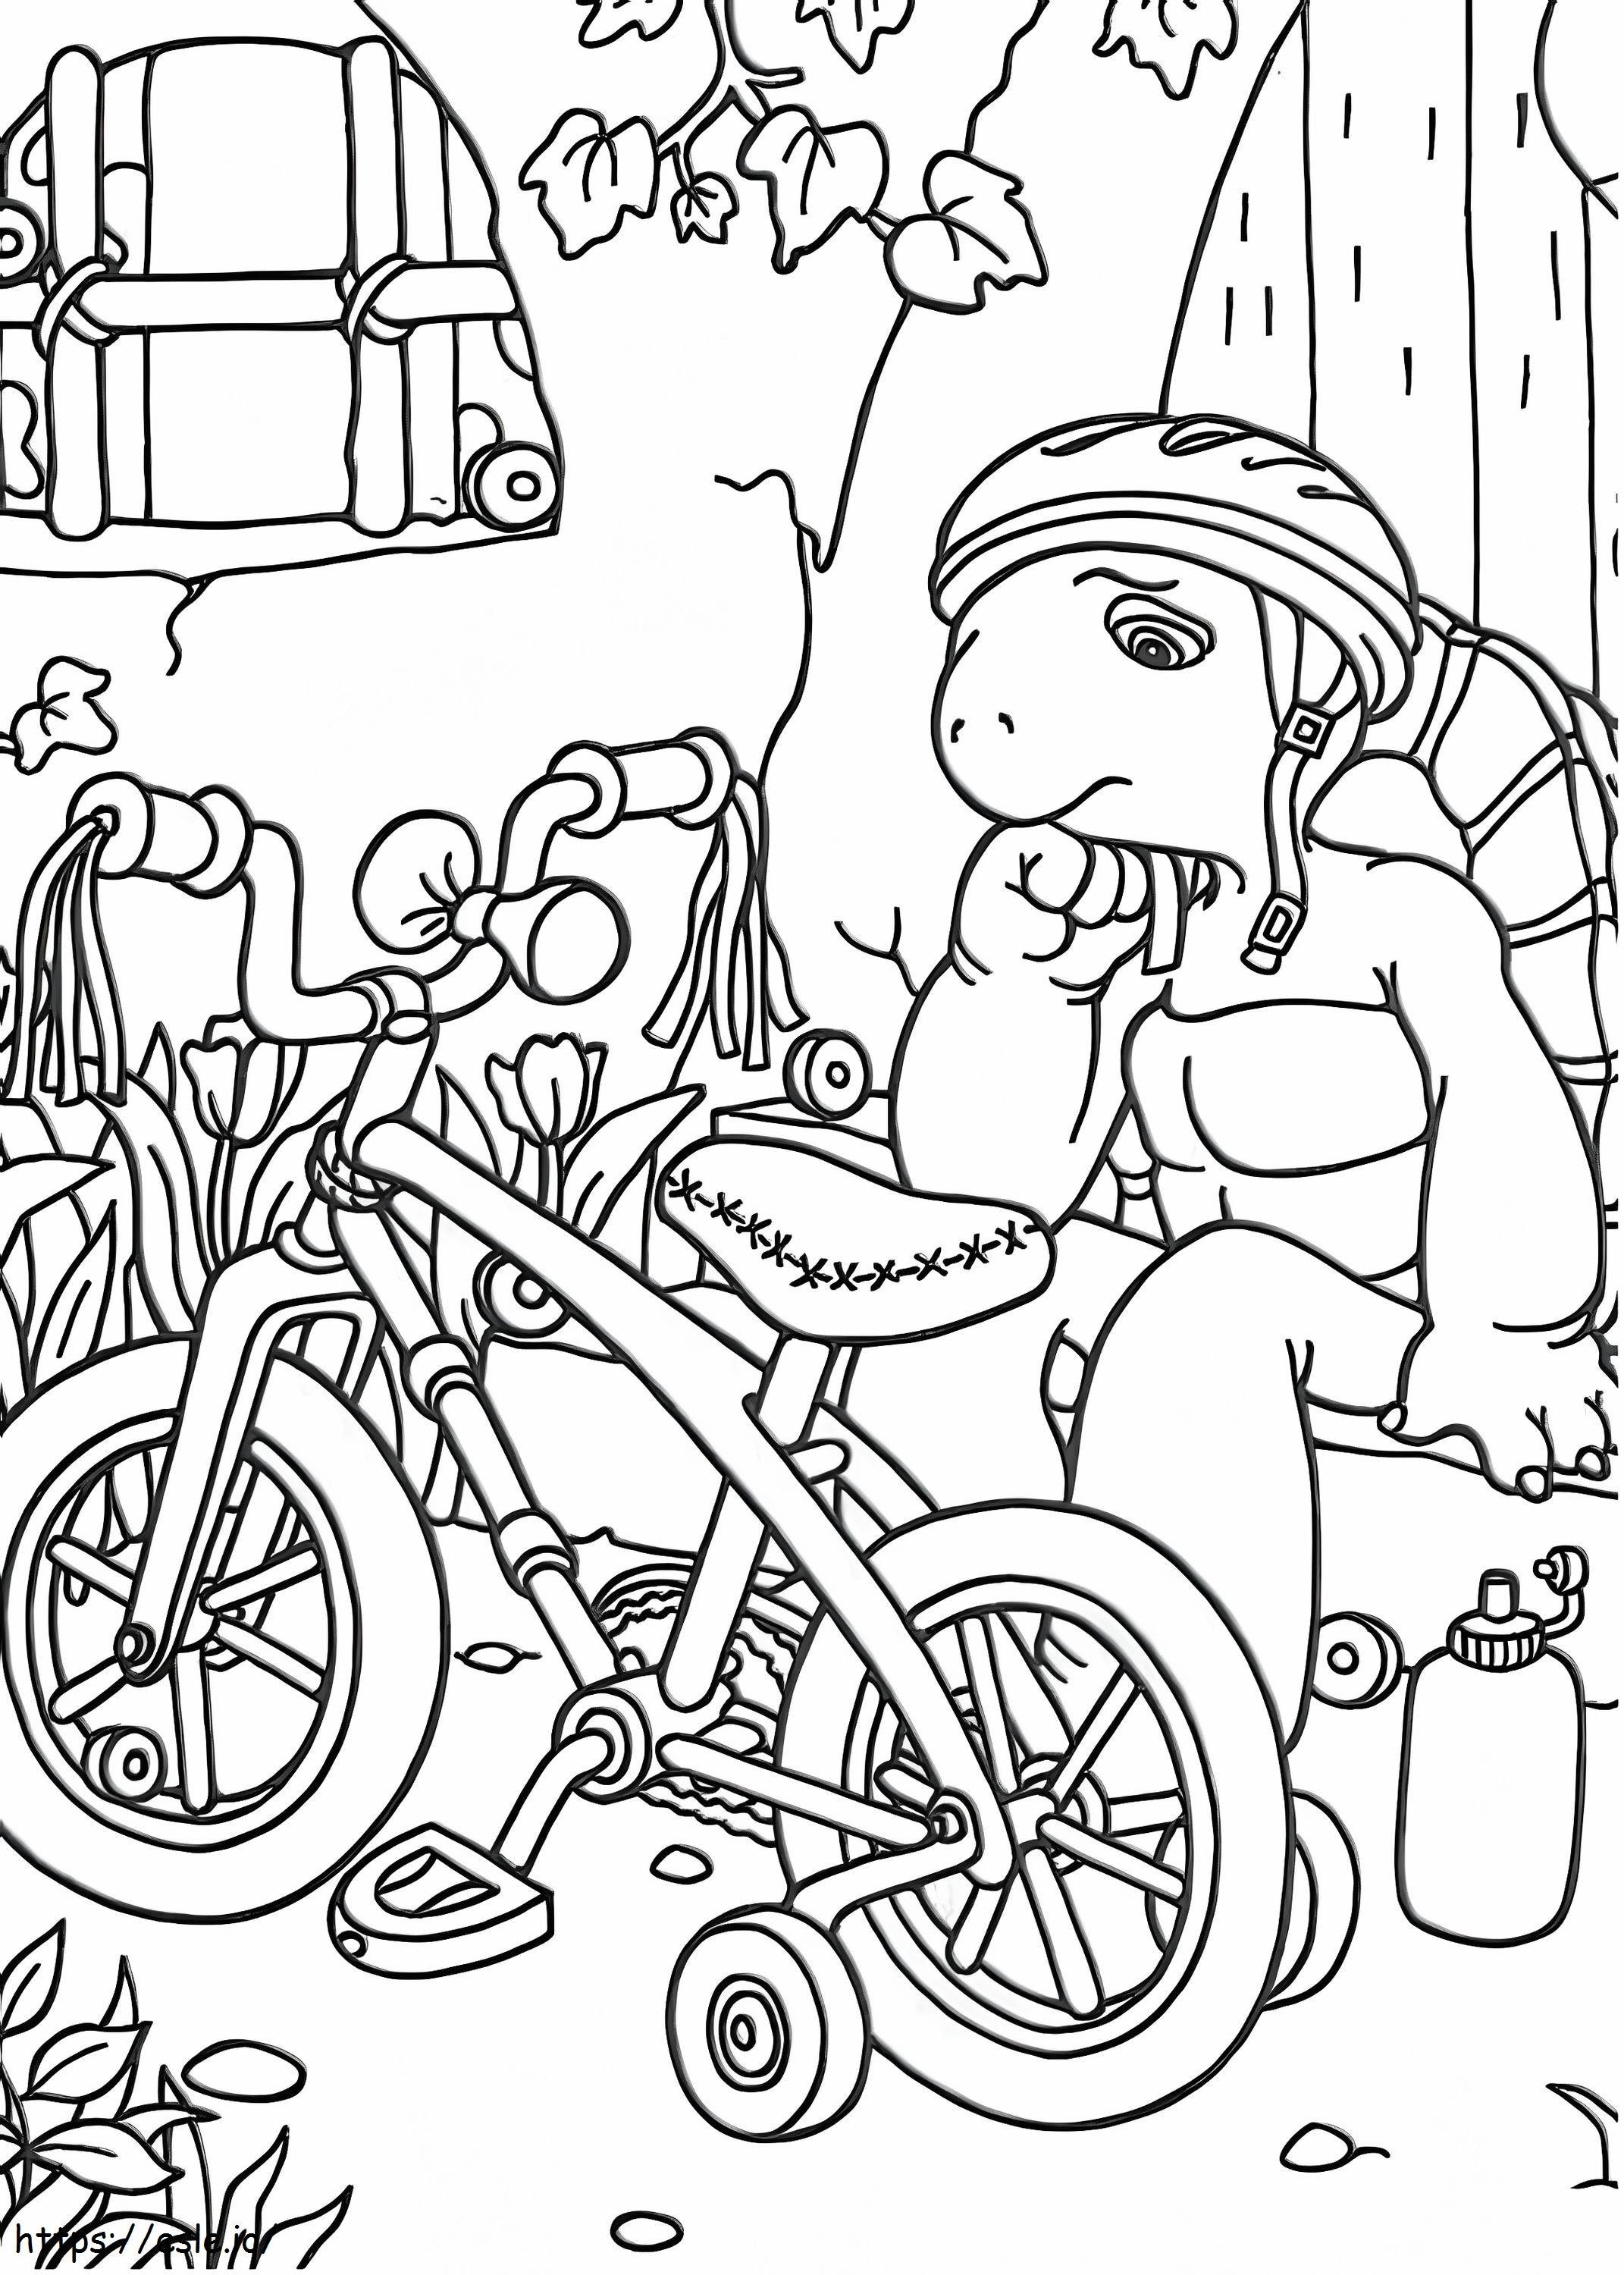  Franklin E Bicicleta A4 para colorir